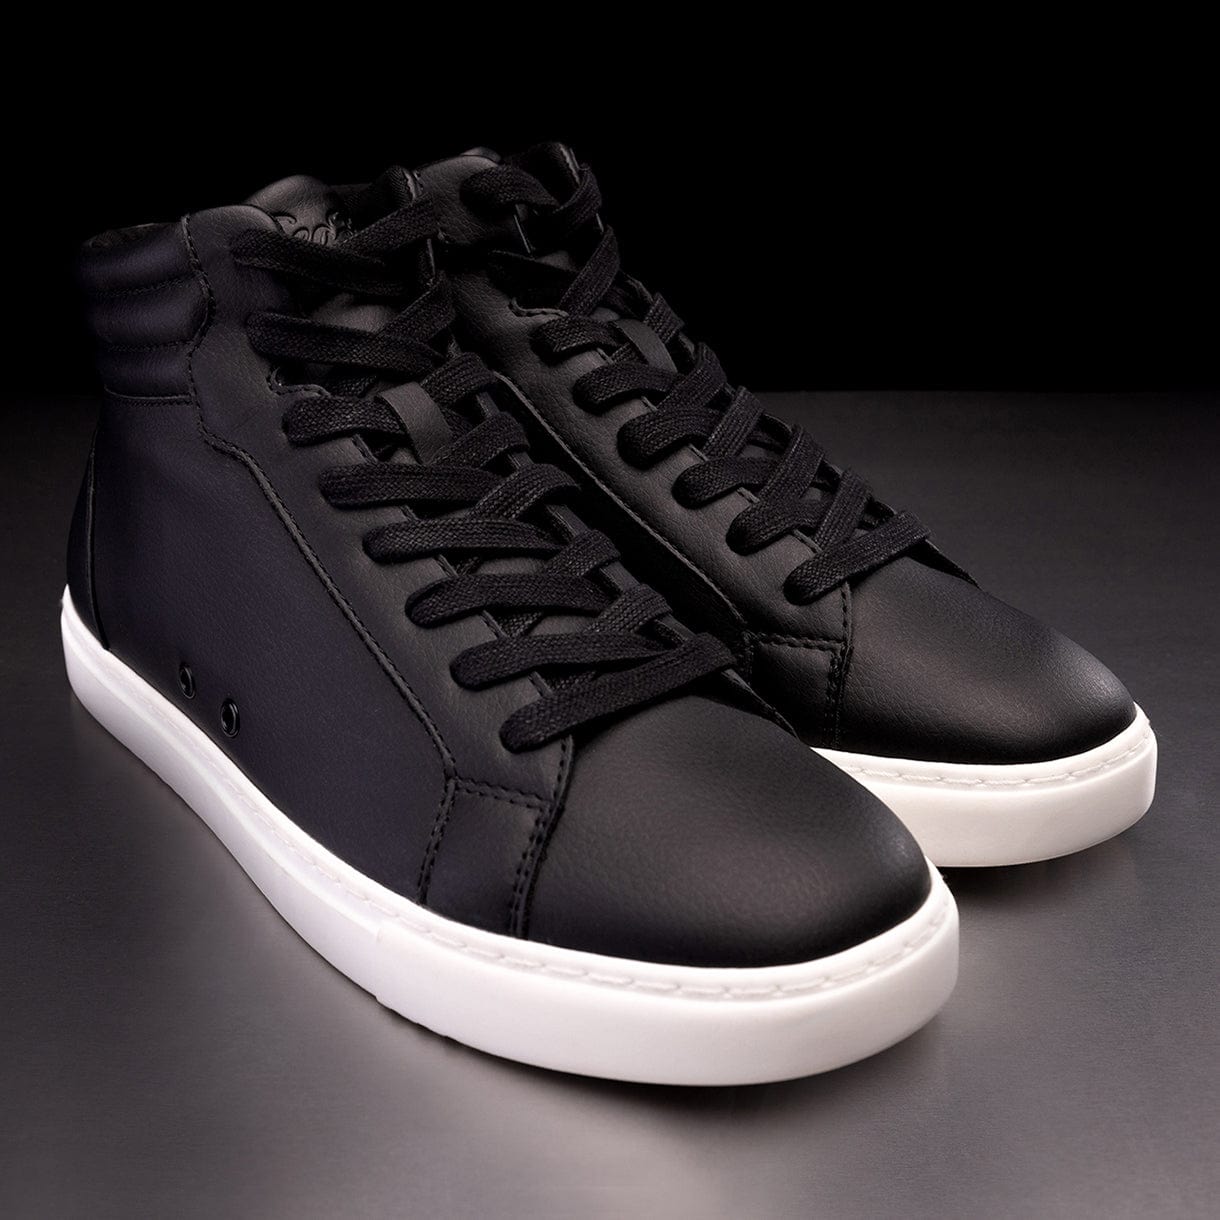 Hi Top Sneakers Black on Sale | bellvalefarms.com